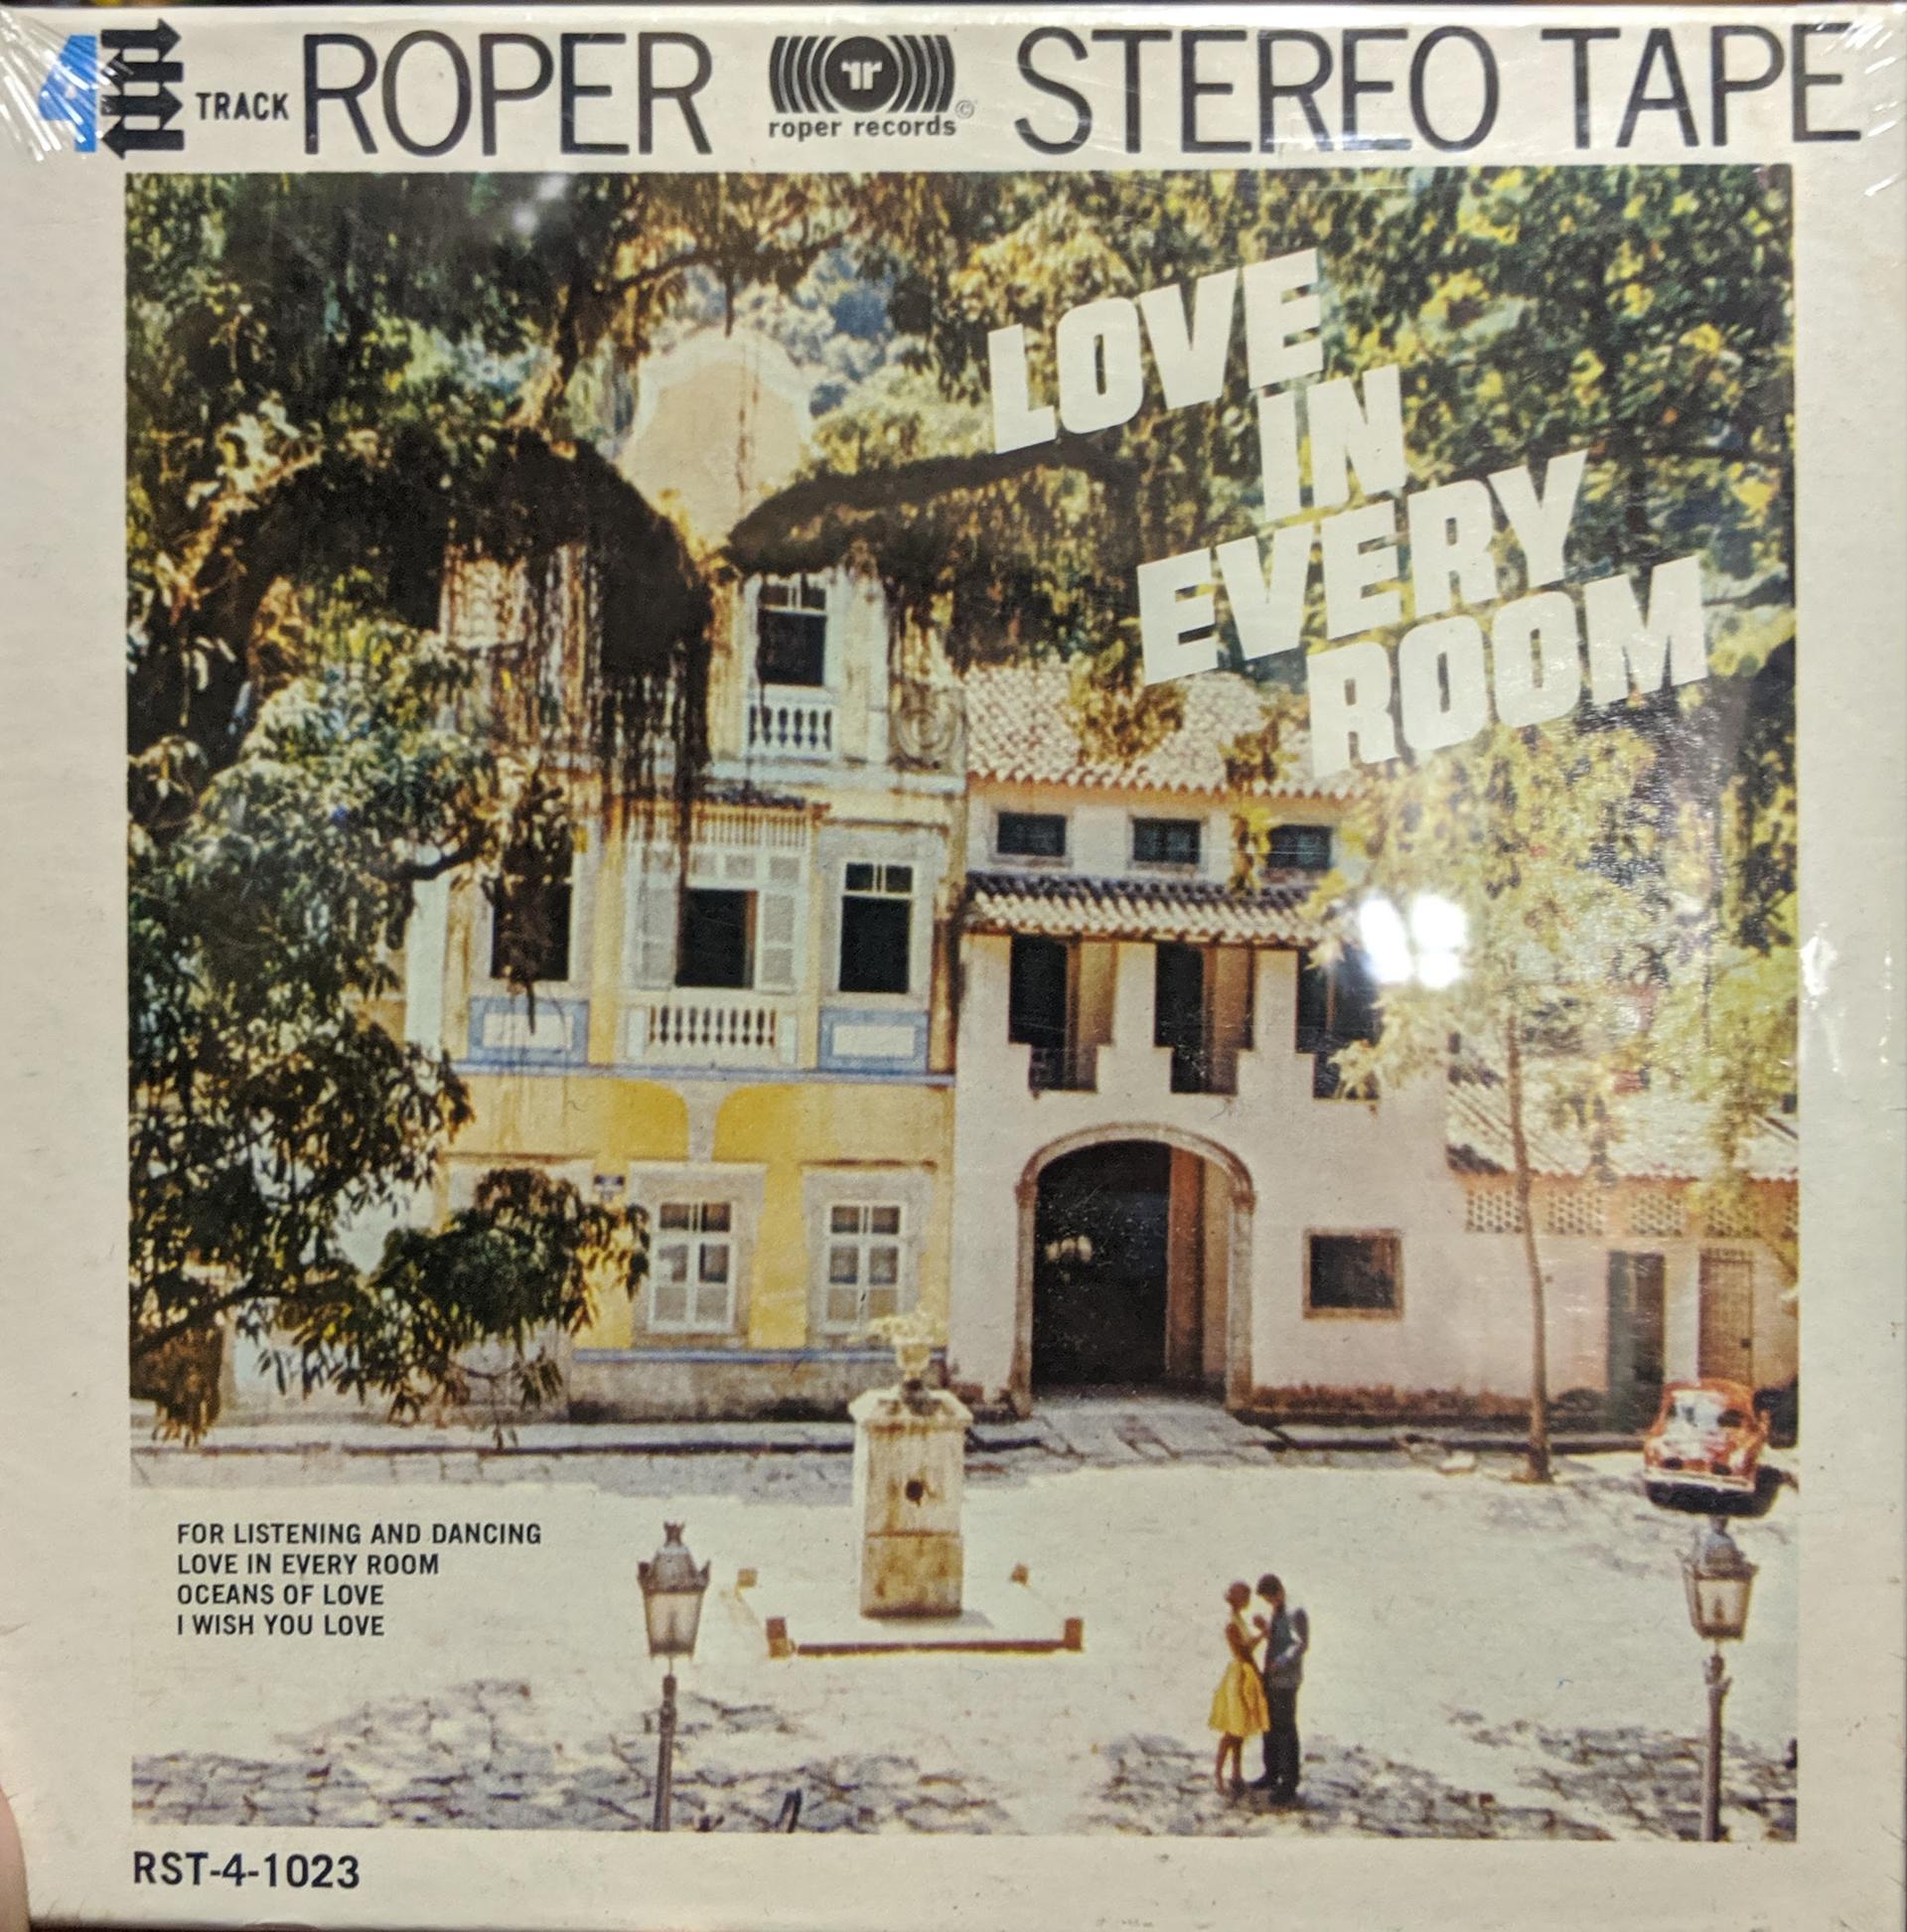 A Roper record